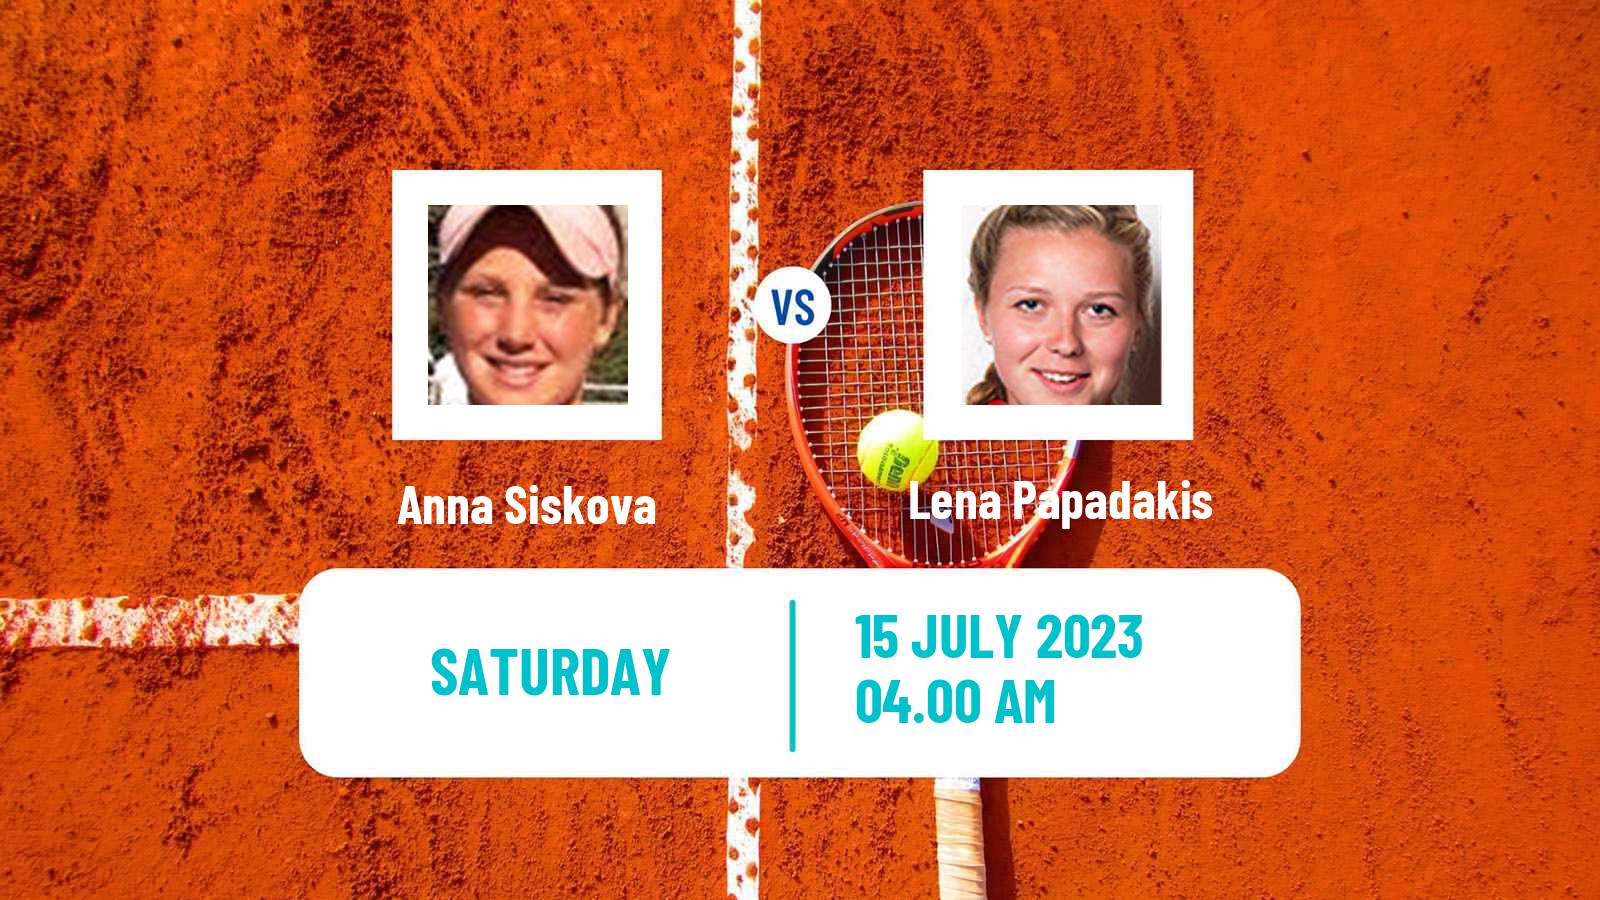 Tennis WTA Budapest Anna Siskova - Lena Papadakis